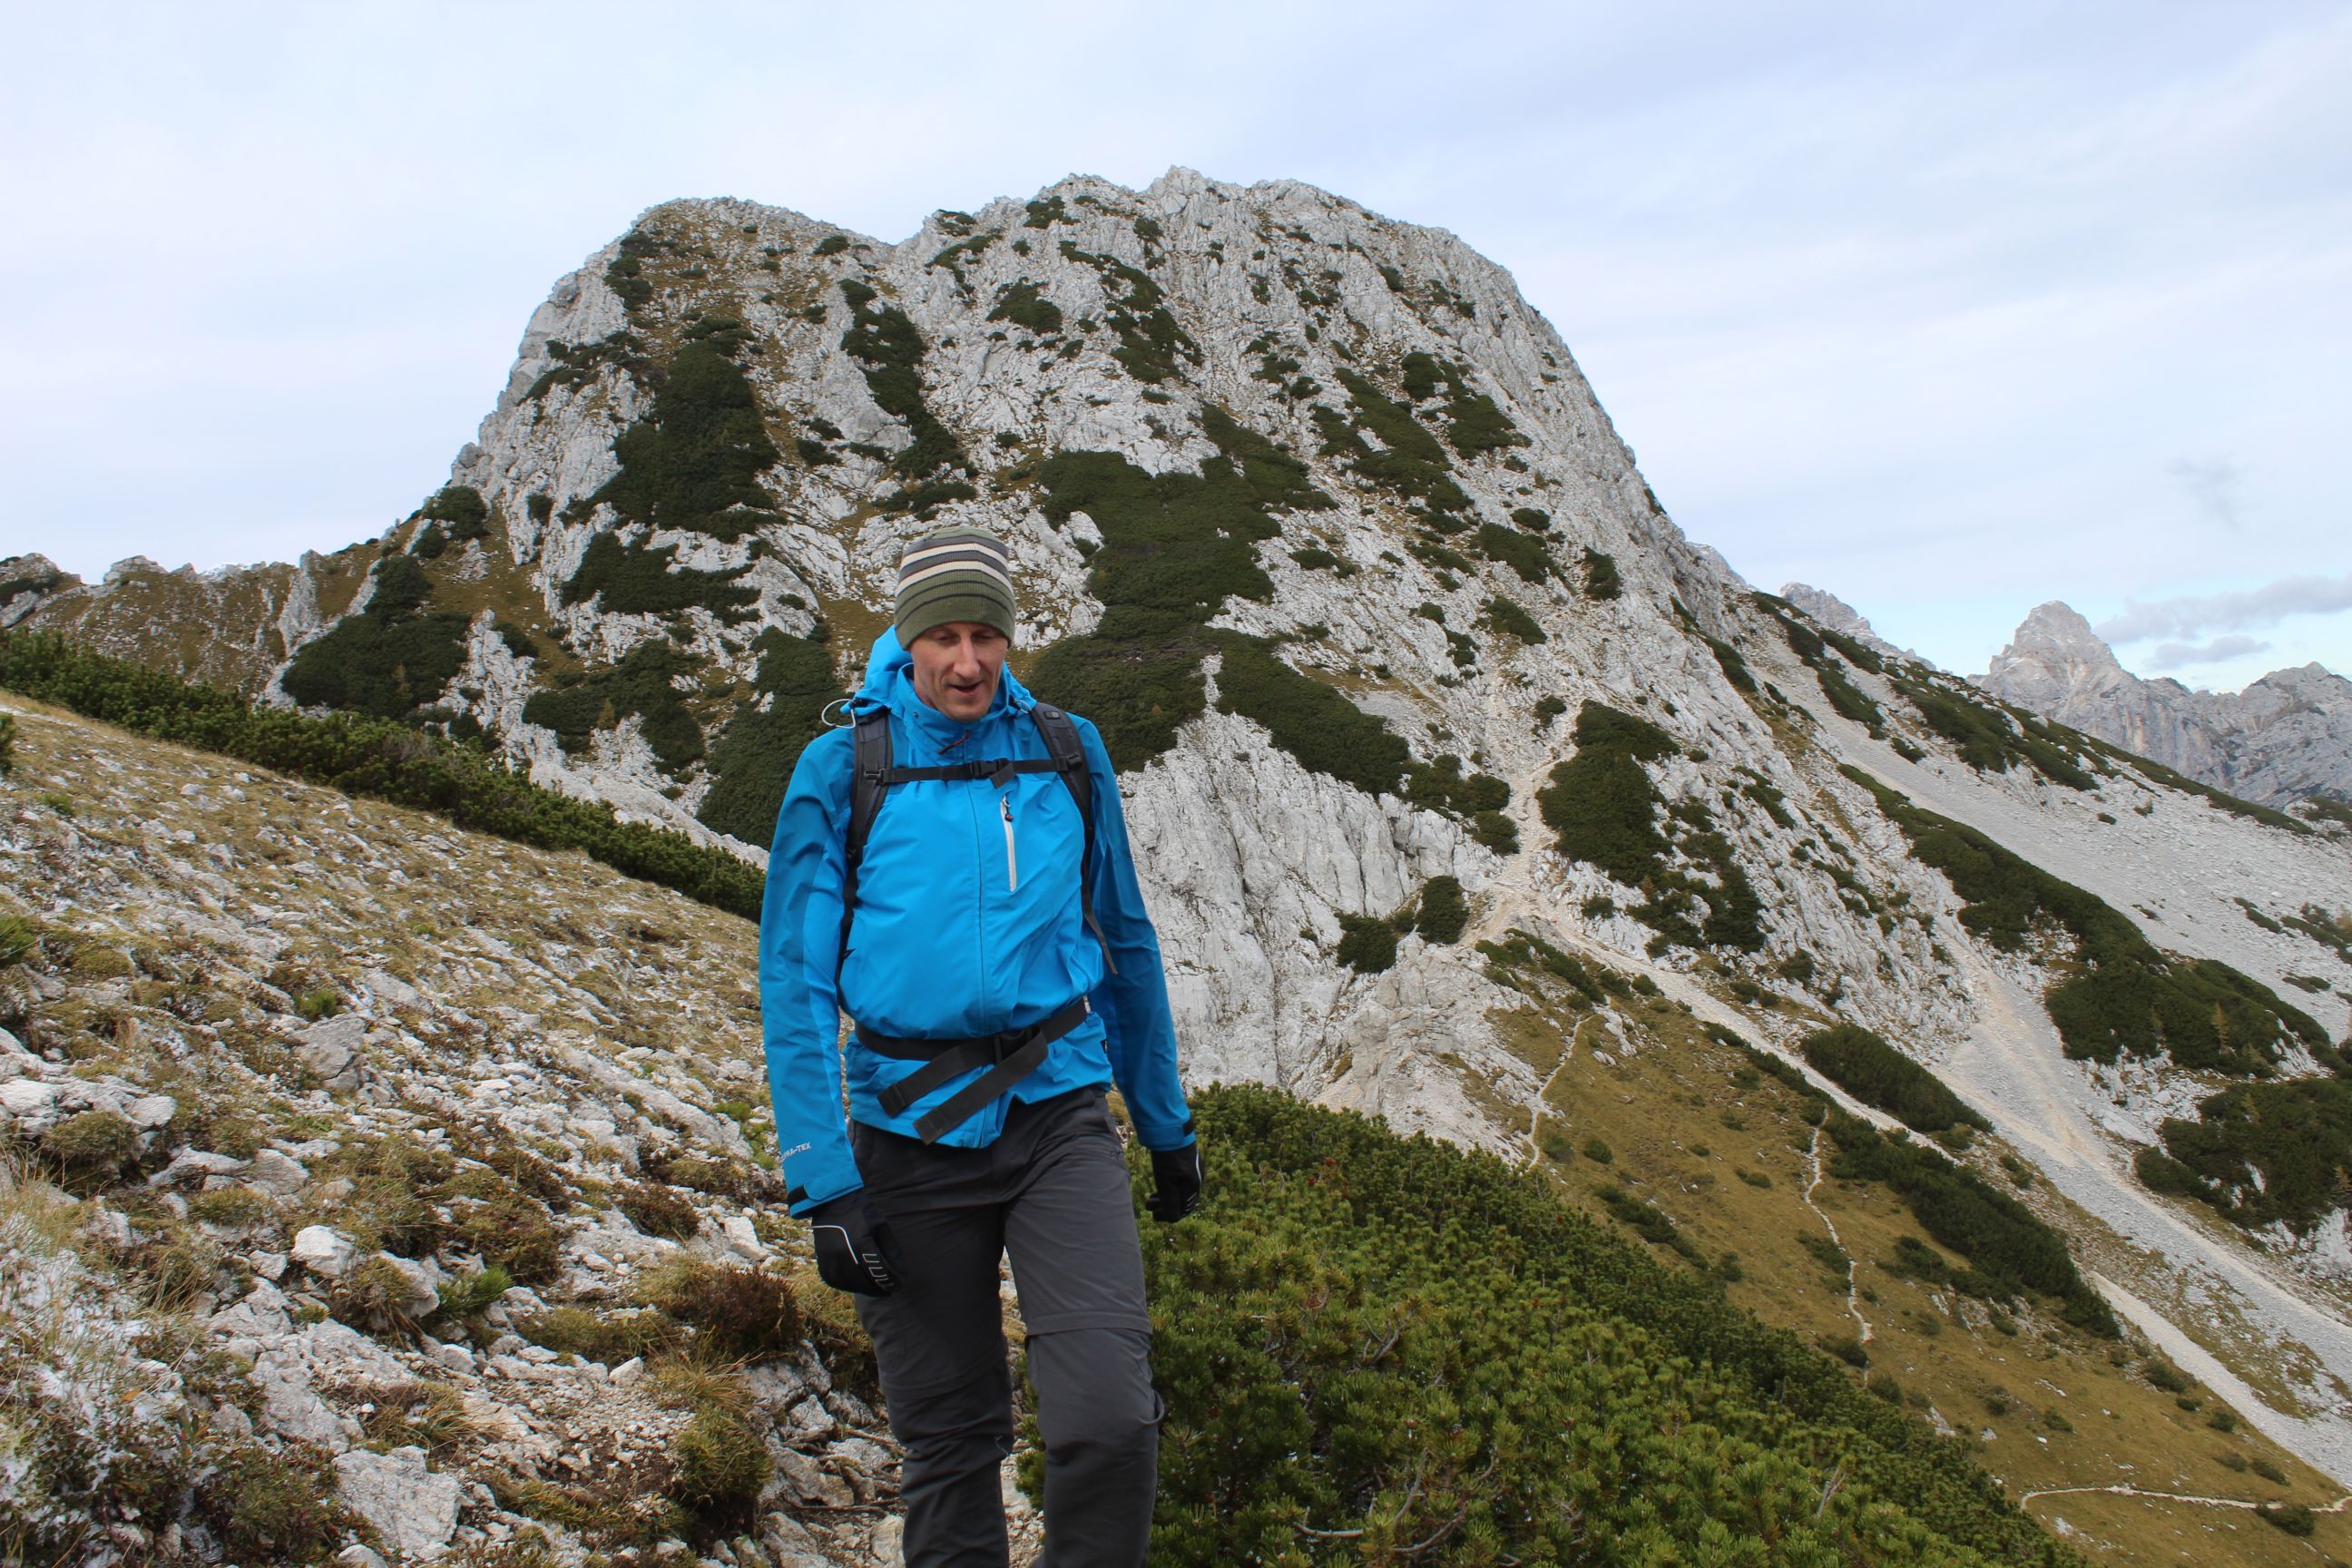 A man hiking along the ridgeline of Lipanski vrh, a mountain in Slovenia.